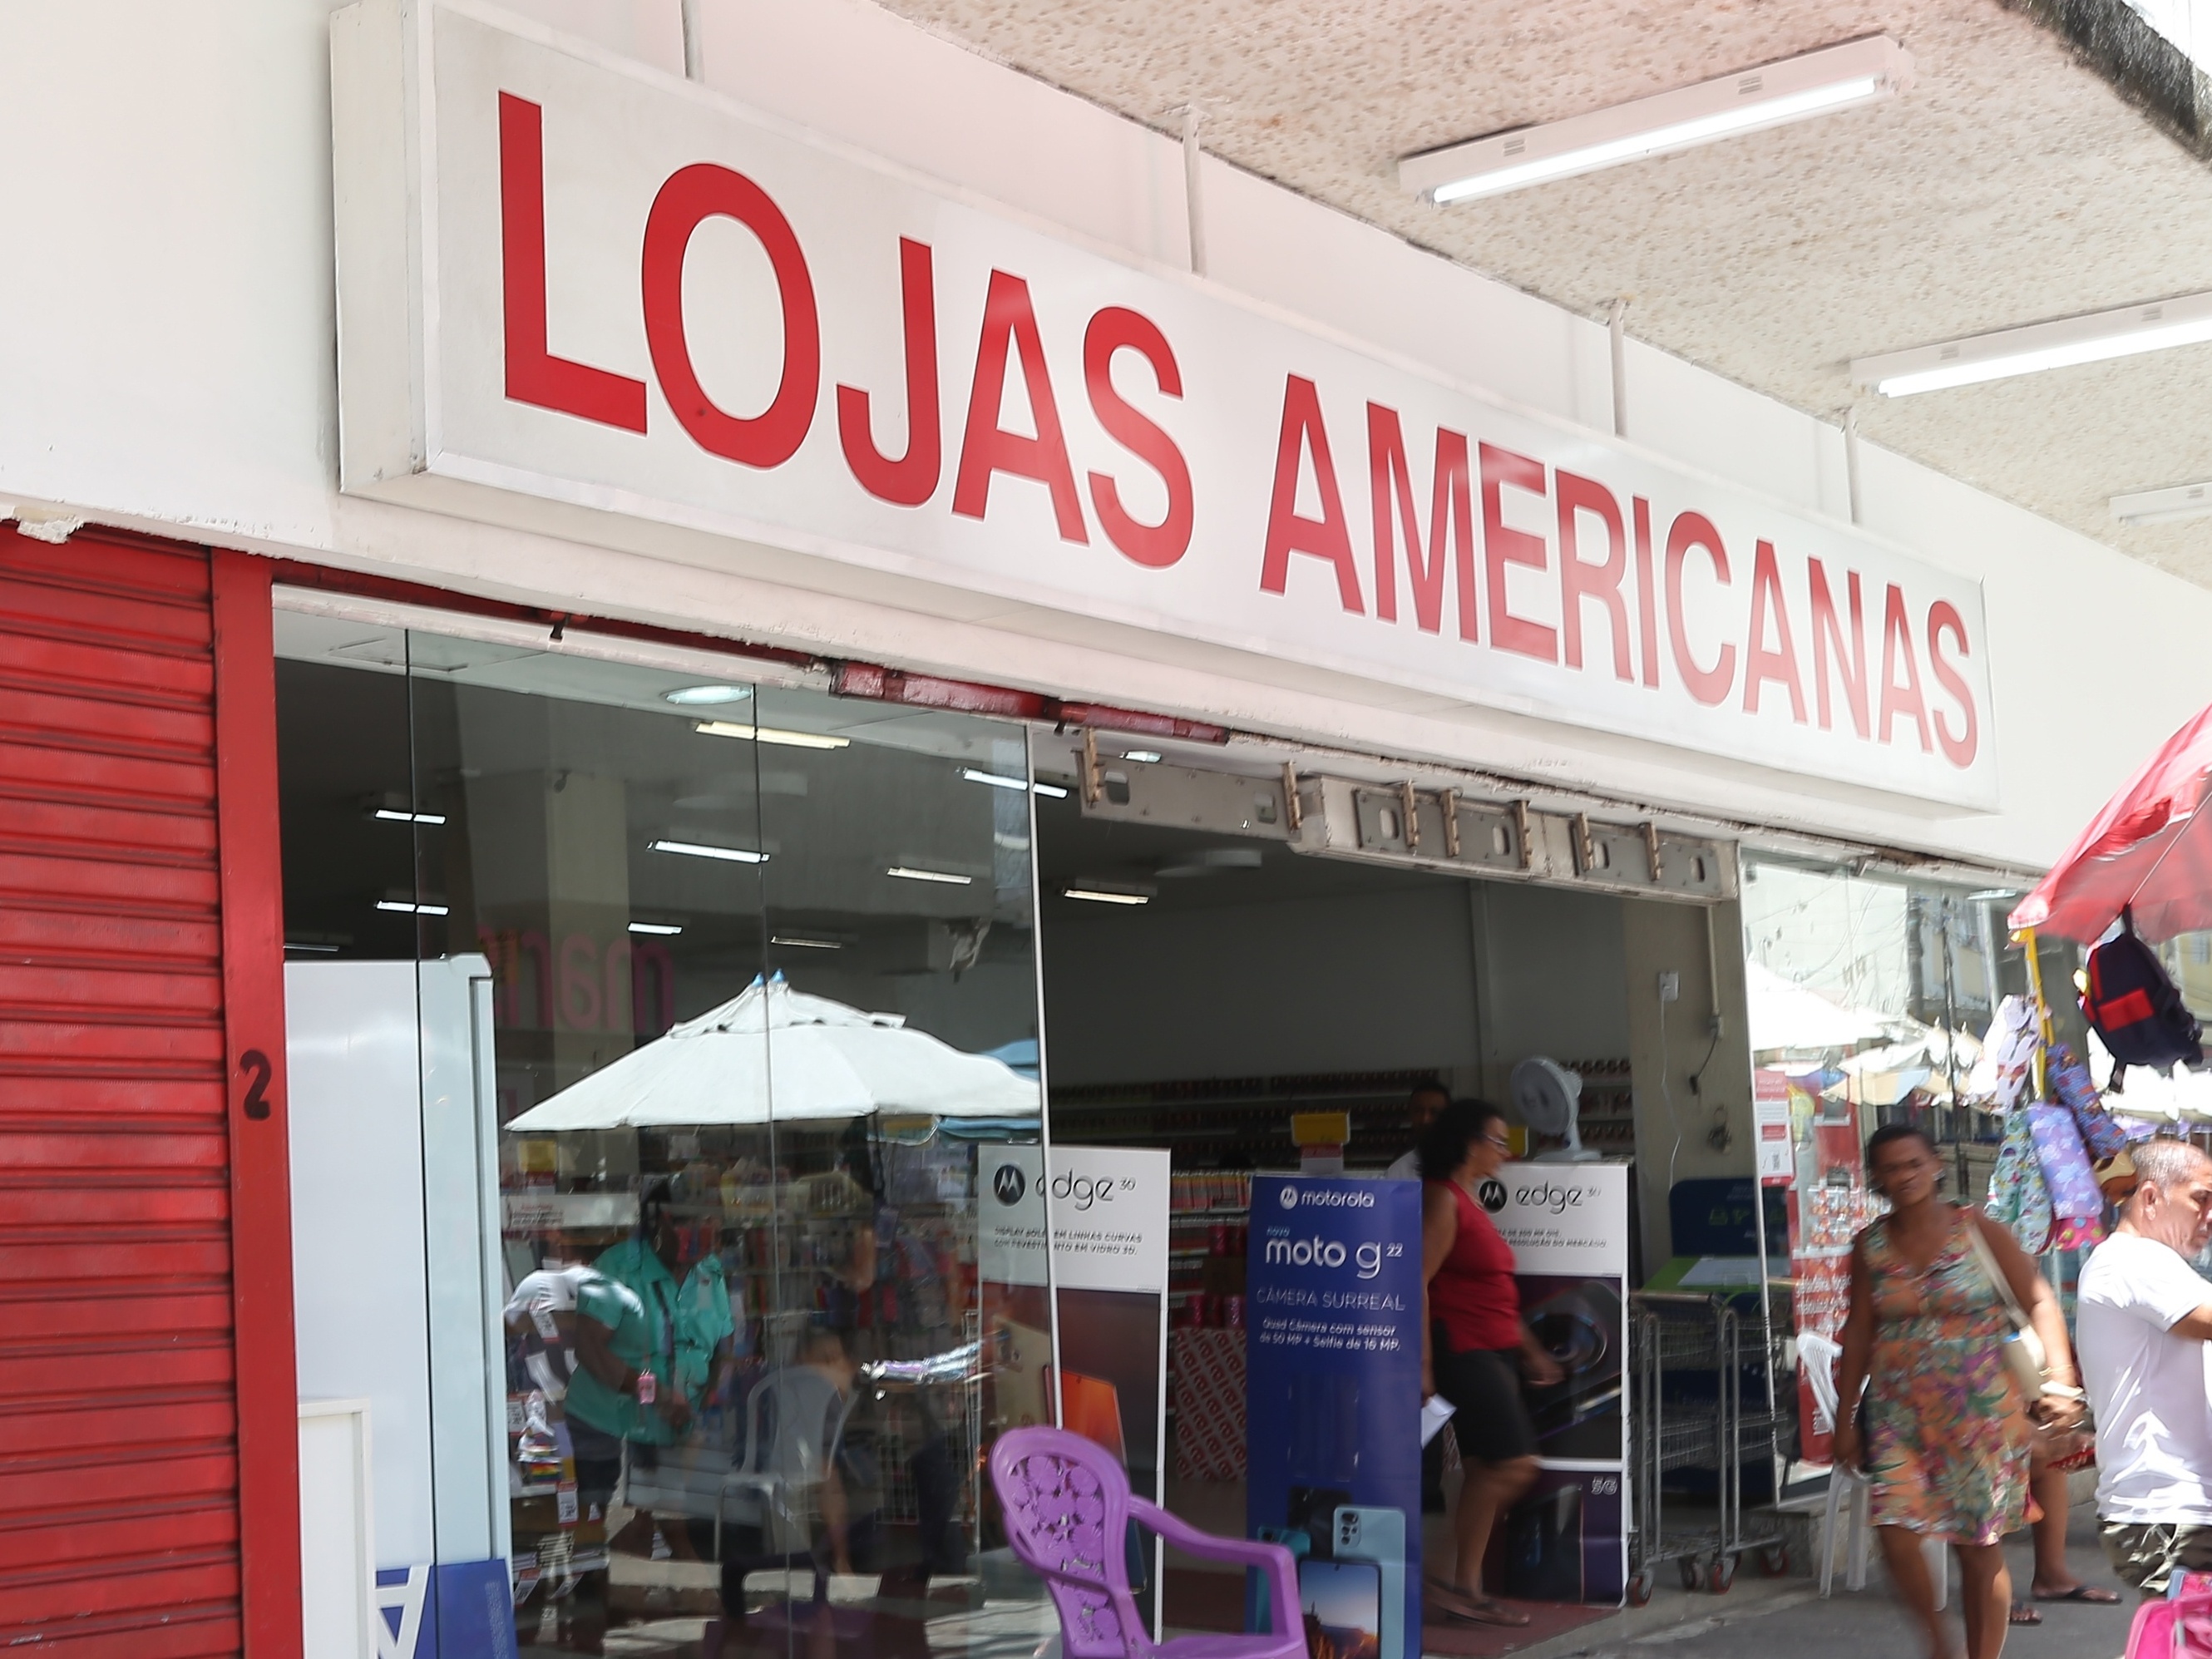 Americanas: notícias sobre as Lojas Americanas